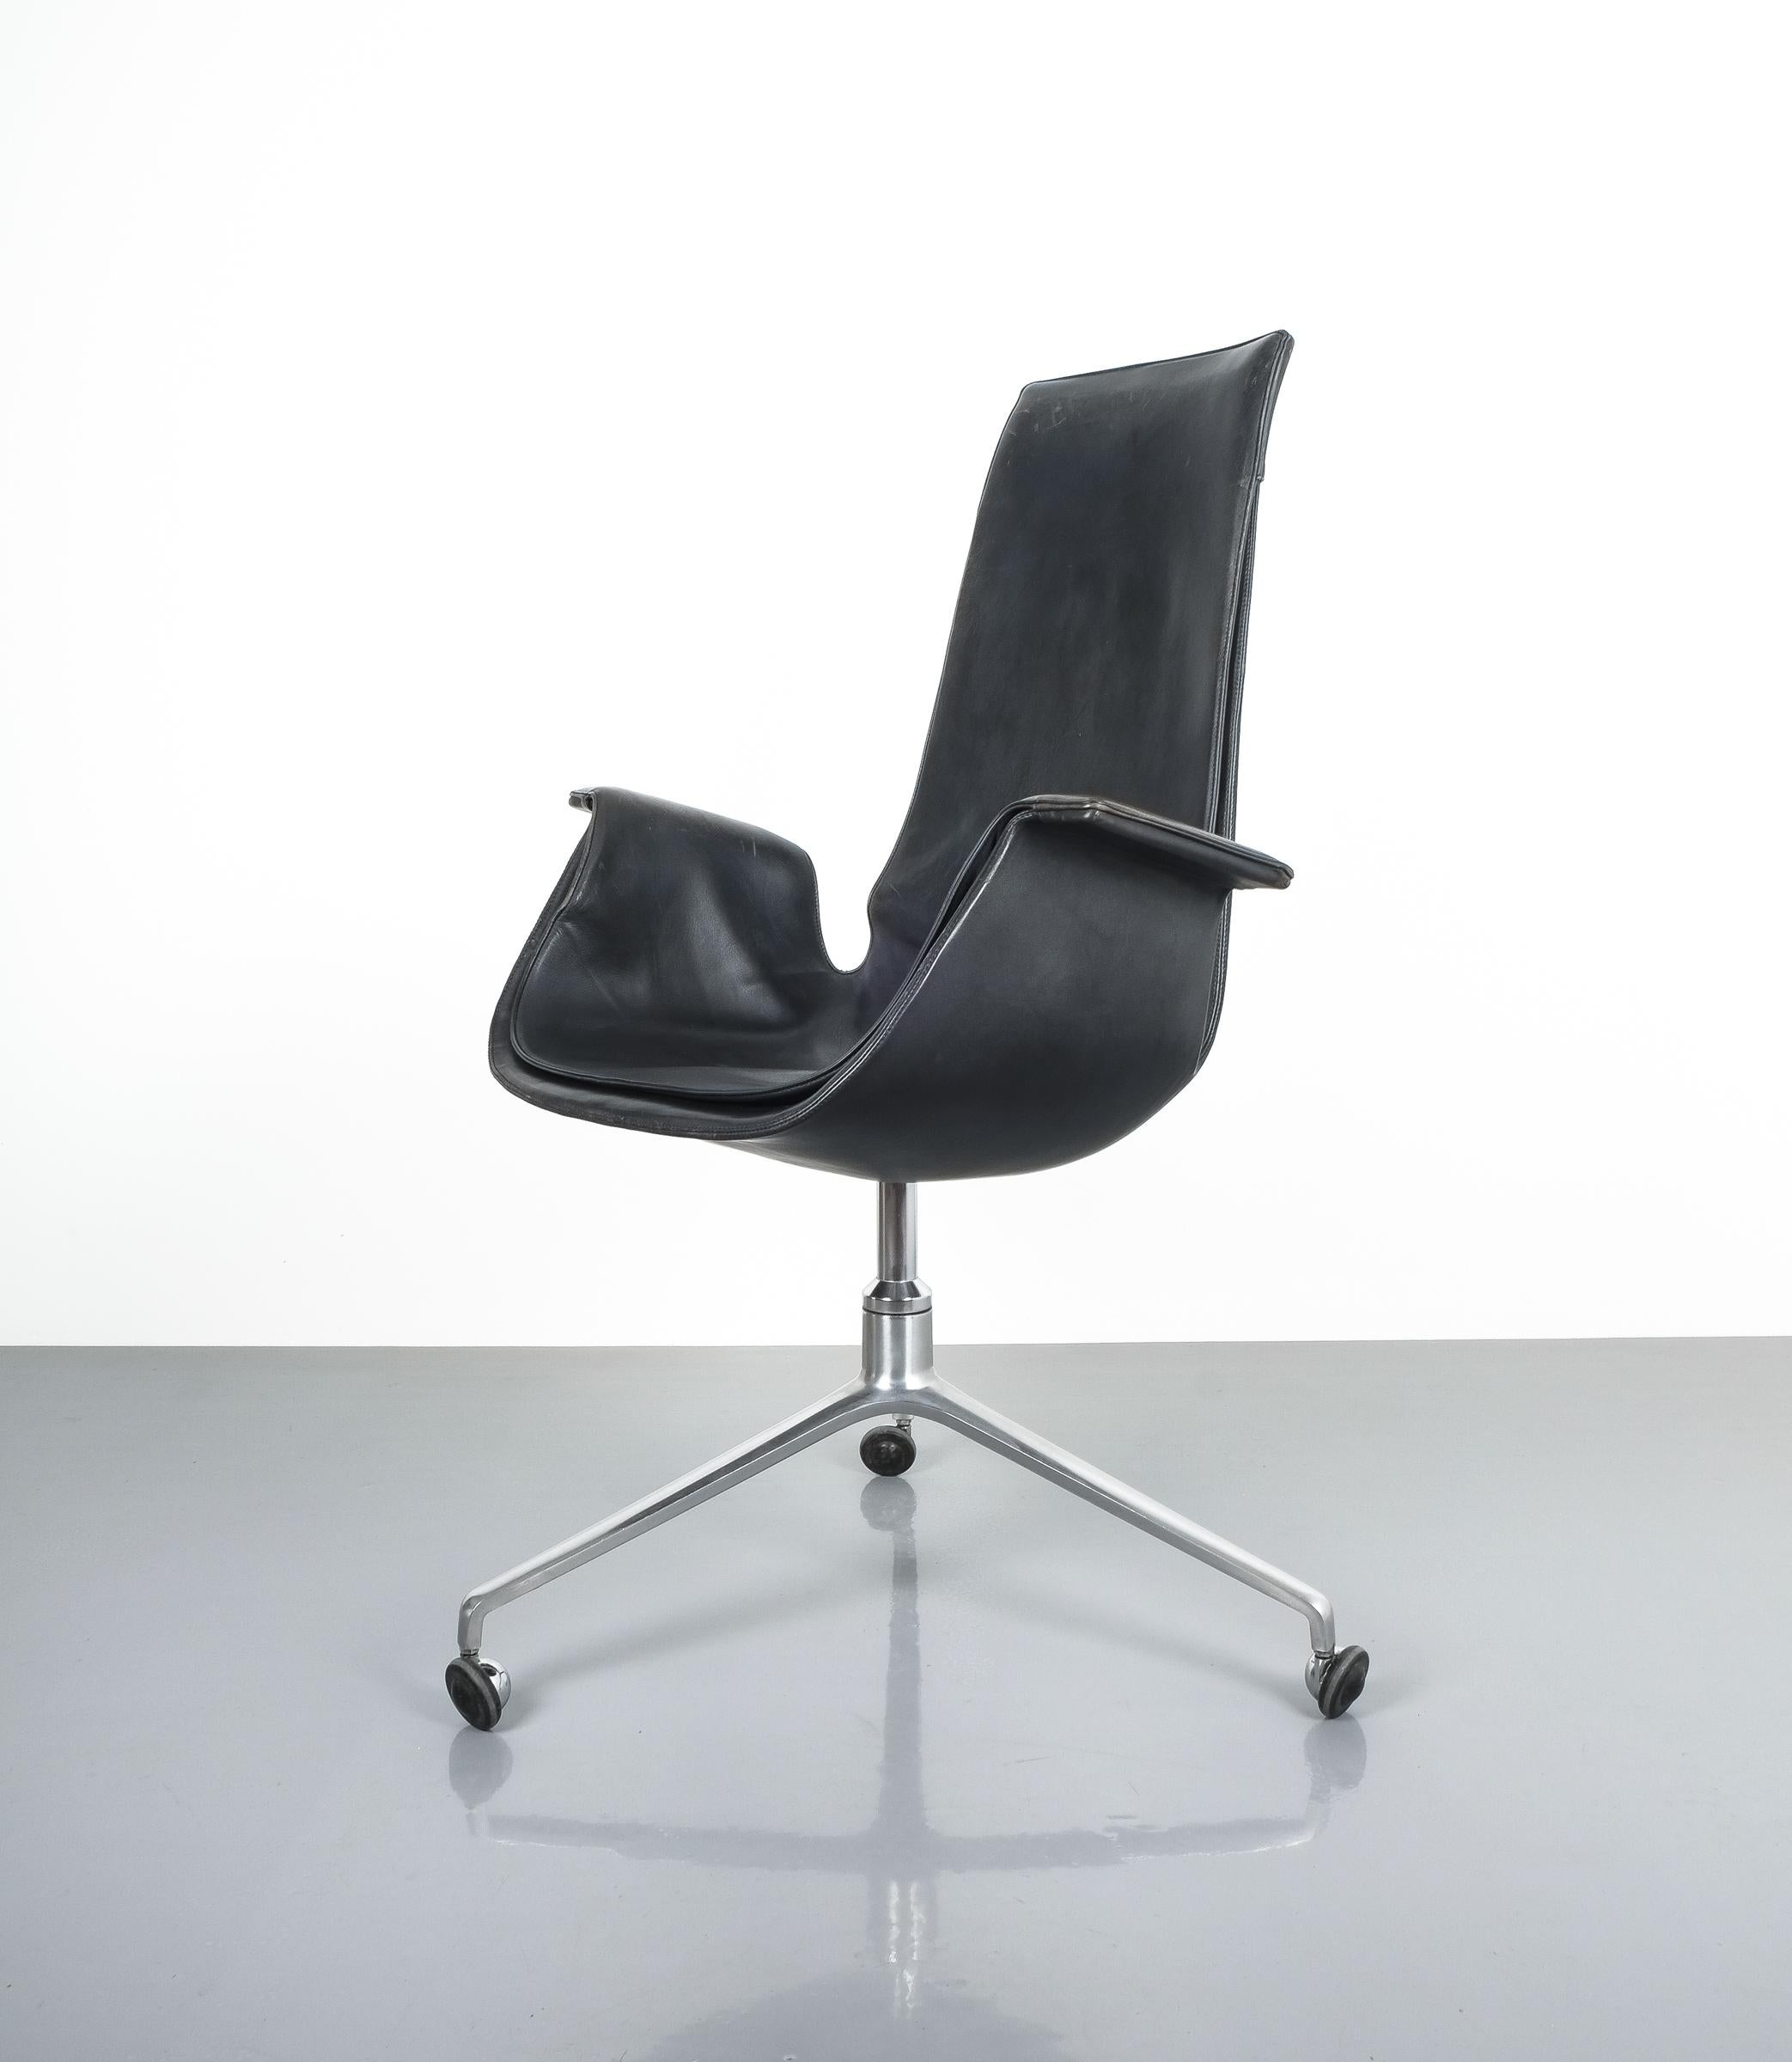 Original vintage dark blackish blue leather desk chair (seat height 19.29